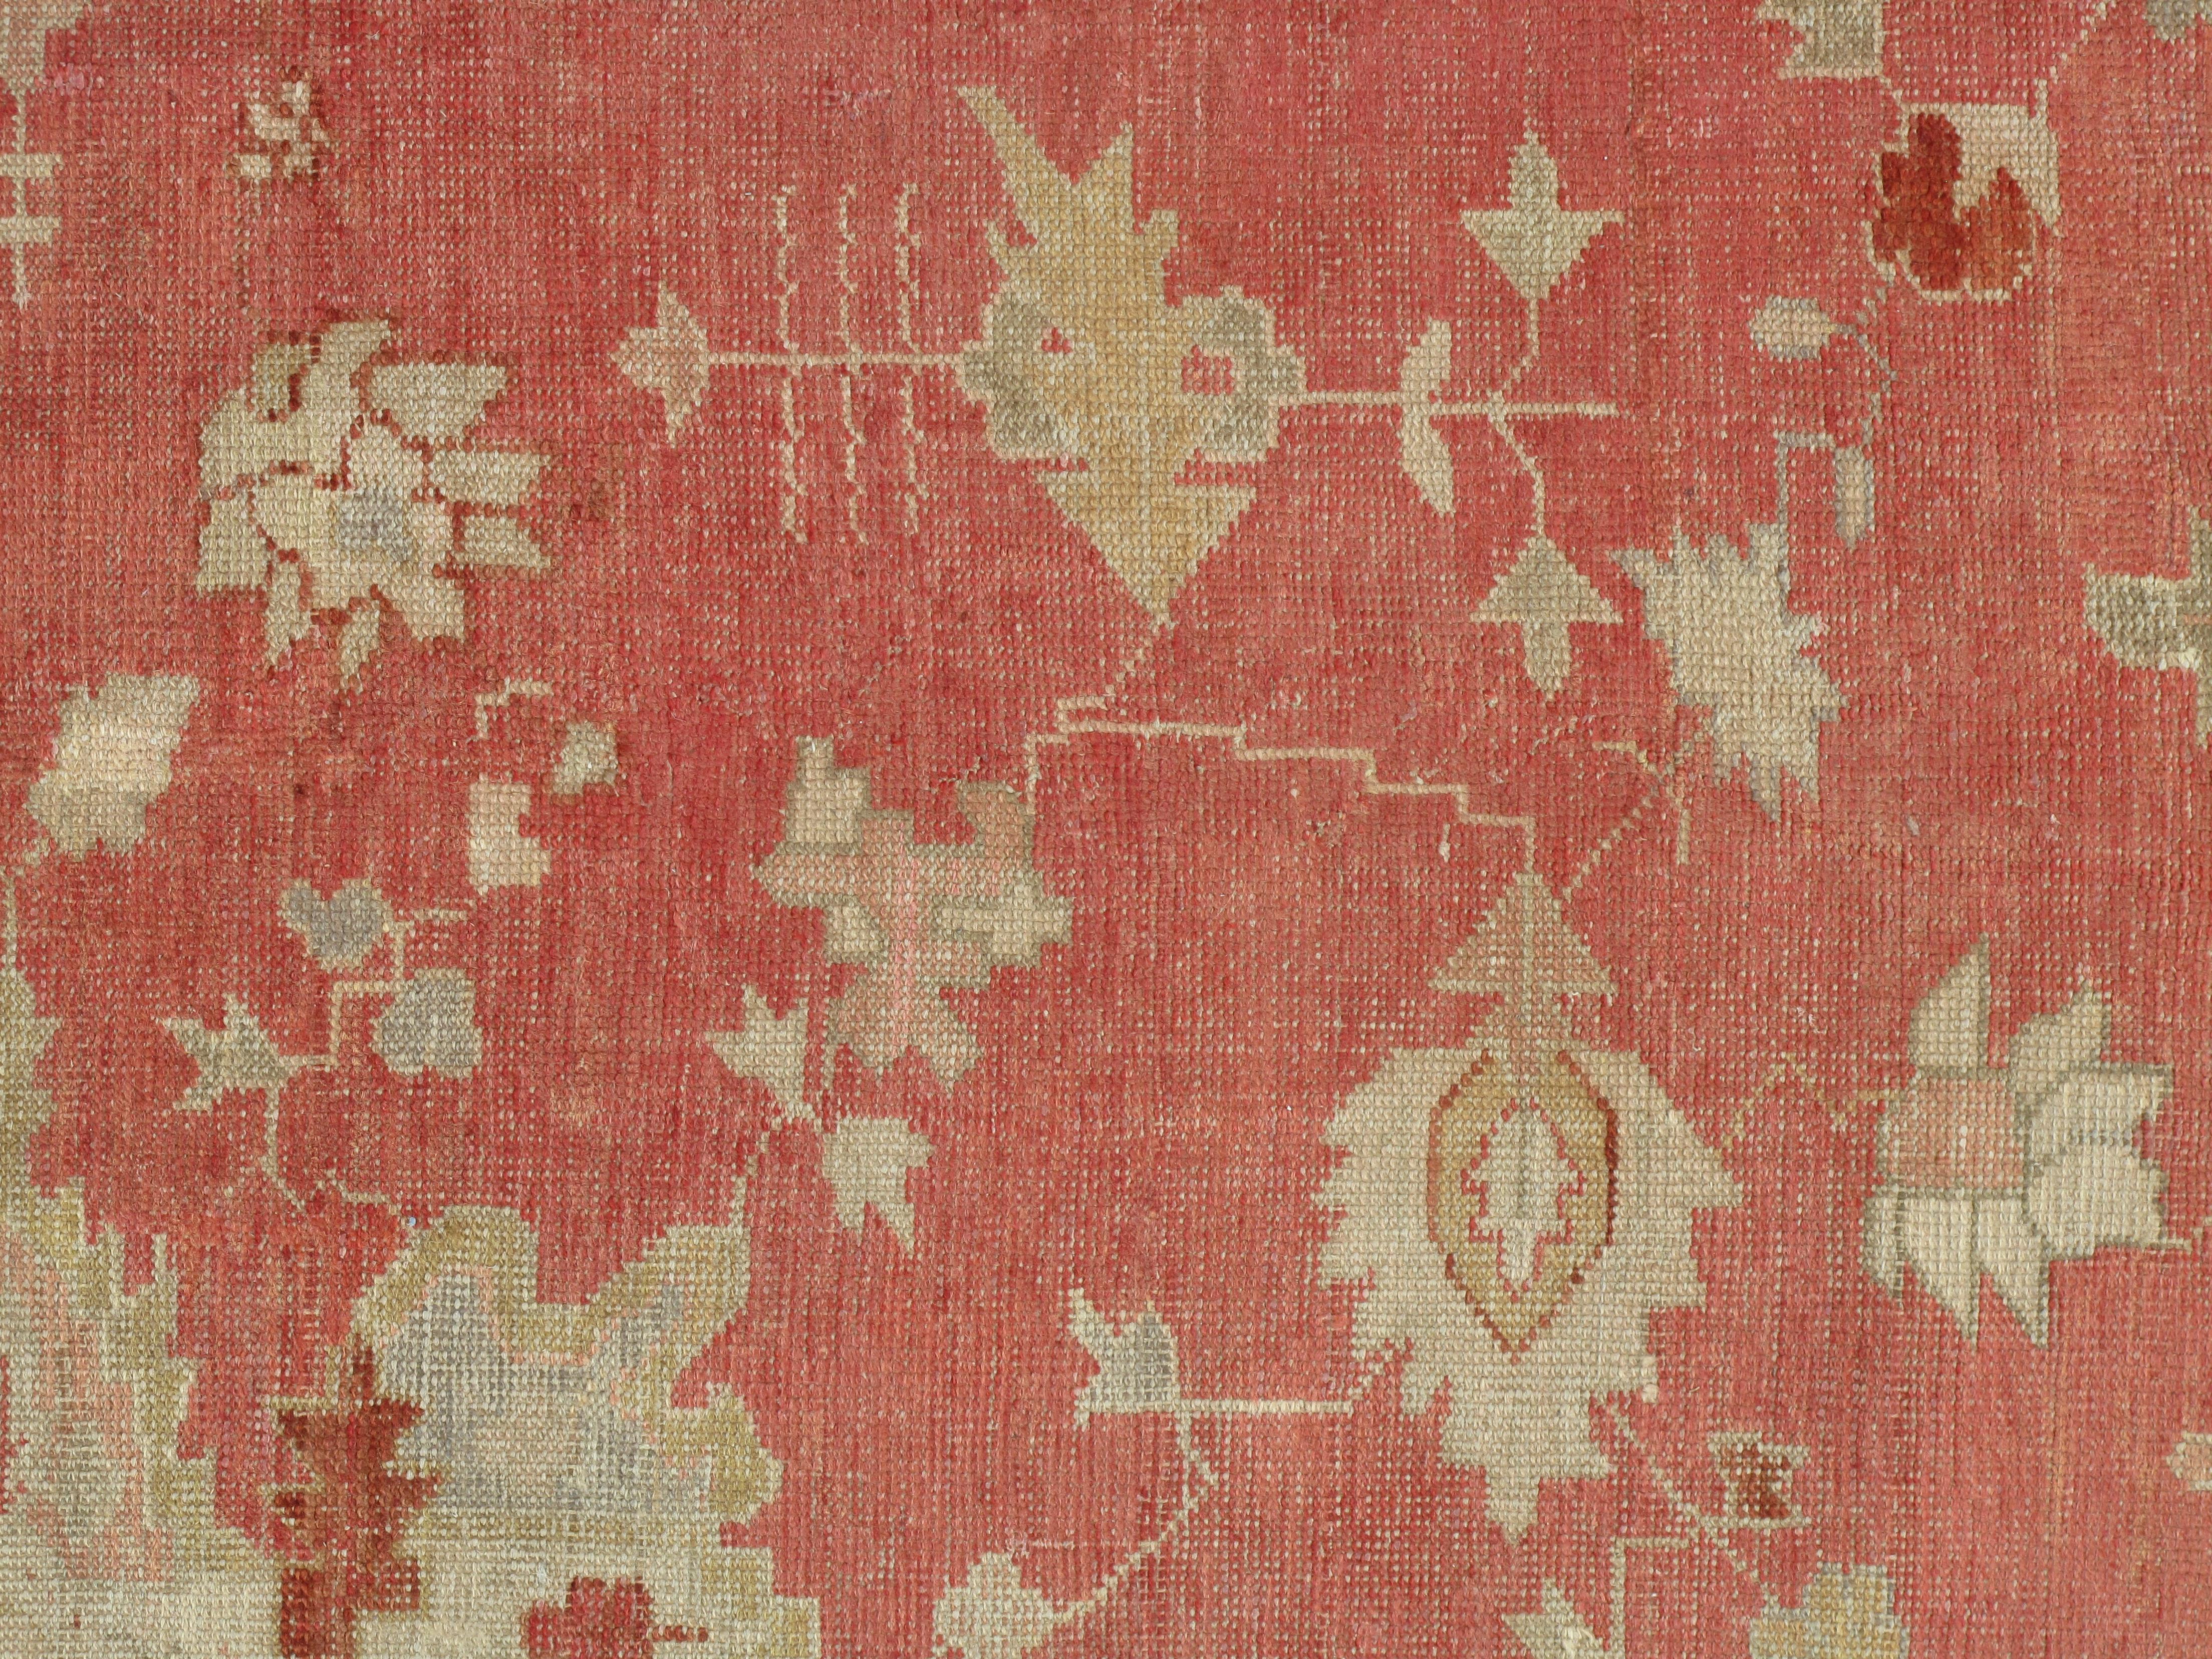 19th Century Antique Oushak Carpet, Handmade Turkish Oriental Rug, Beige, Coral, Soft Colors For Sale